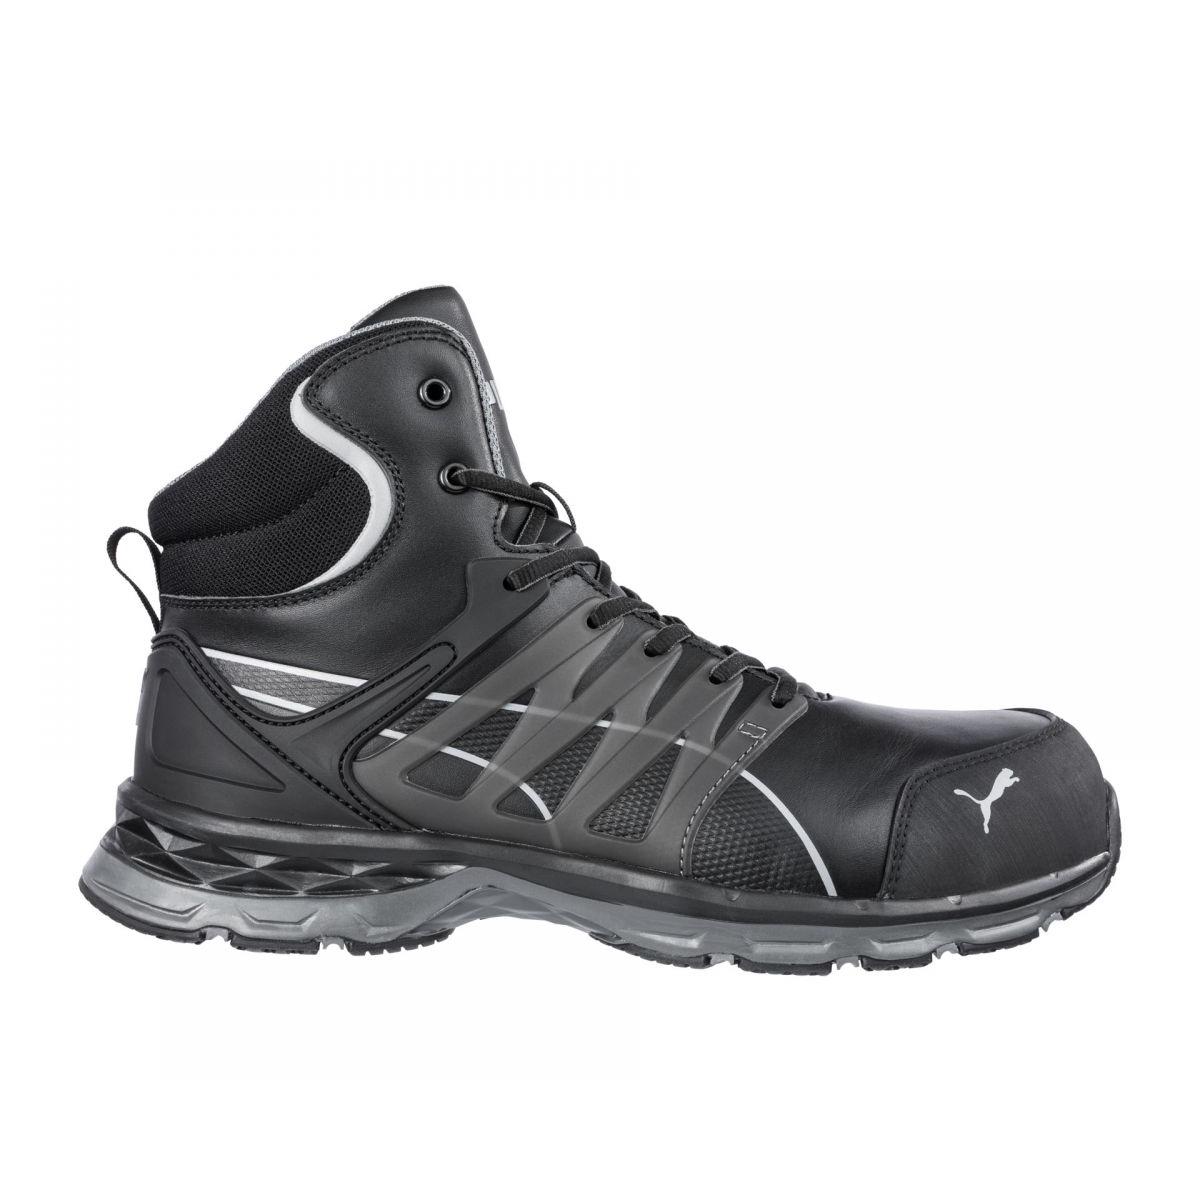 PUMA Safety Men's Velocity 2.0 Mid Composite Toe ESD Work Boot Black - 633805 ONE SIZE BLACK - BLACK, 13